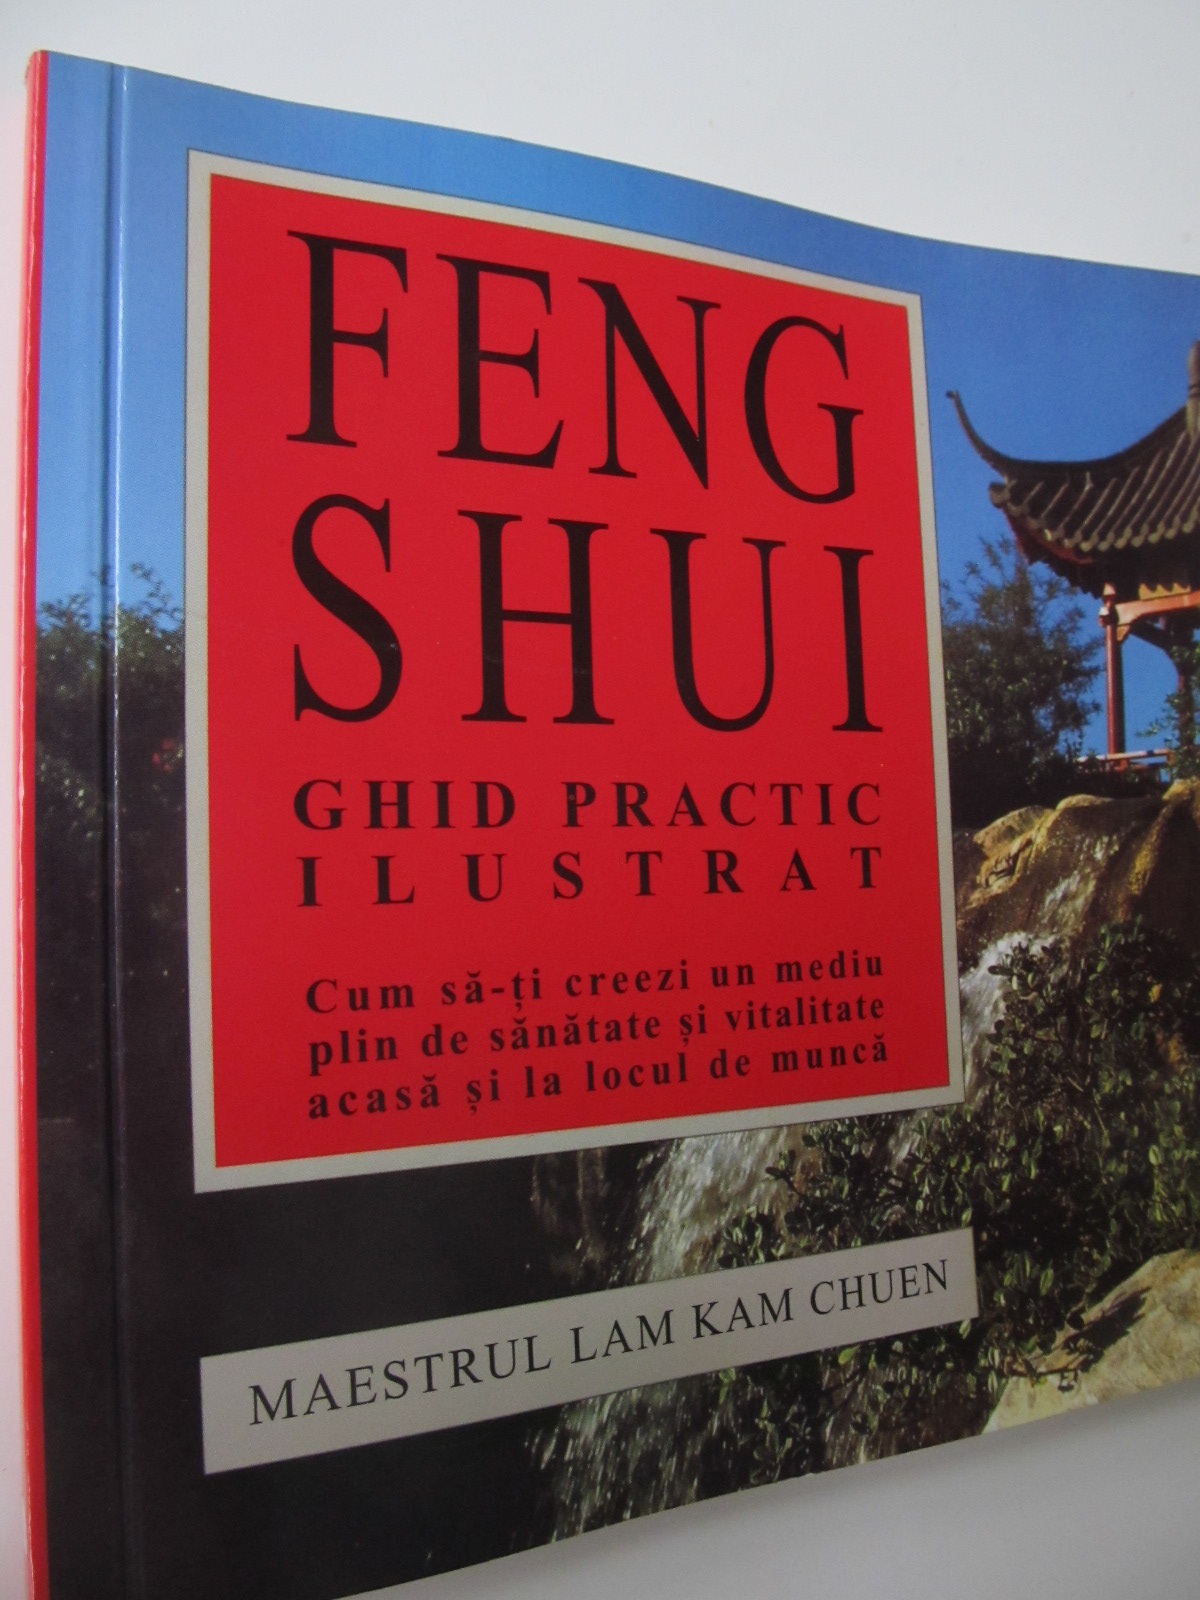 Feng Shui ghid practic ilustrat - Lam Kam Chuen | Detalii carte